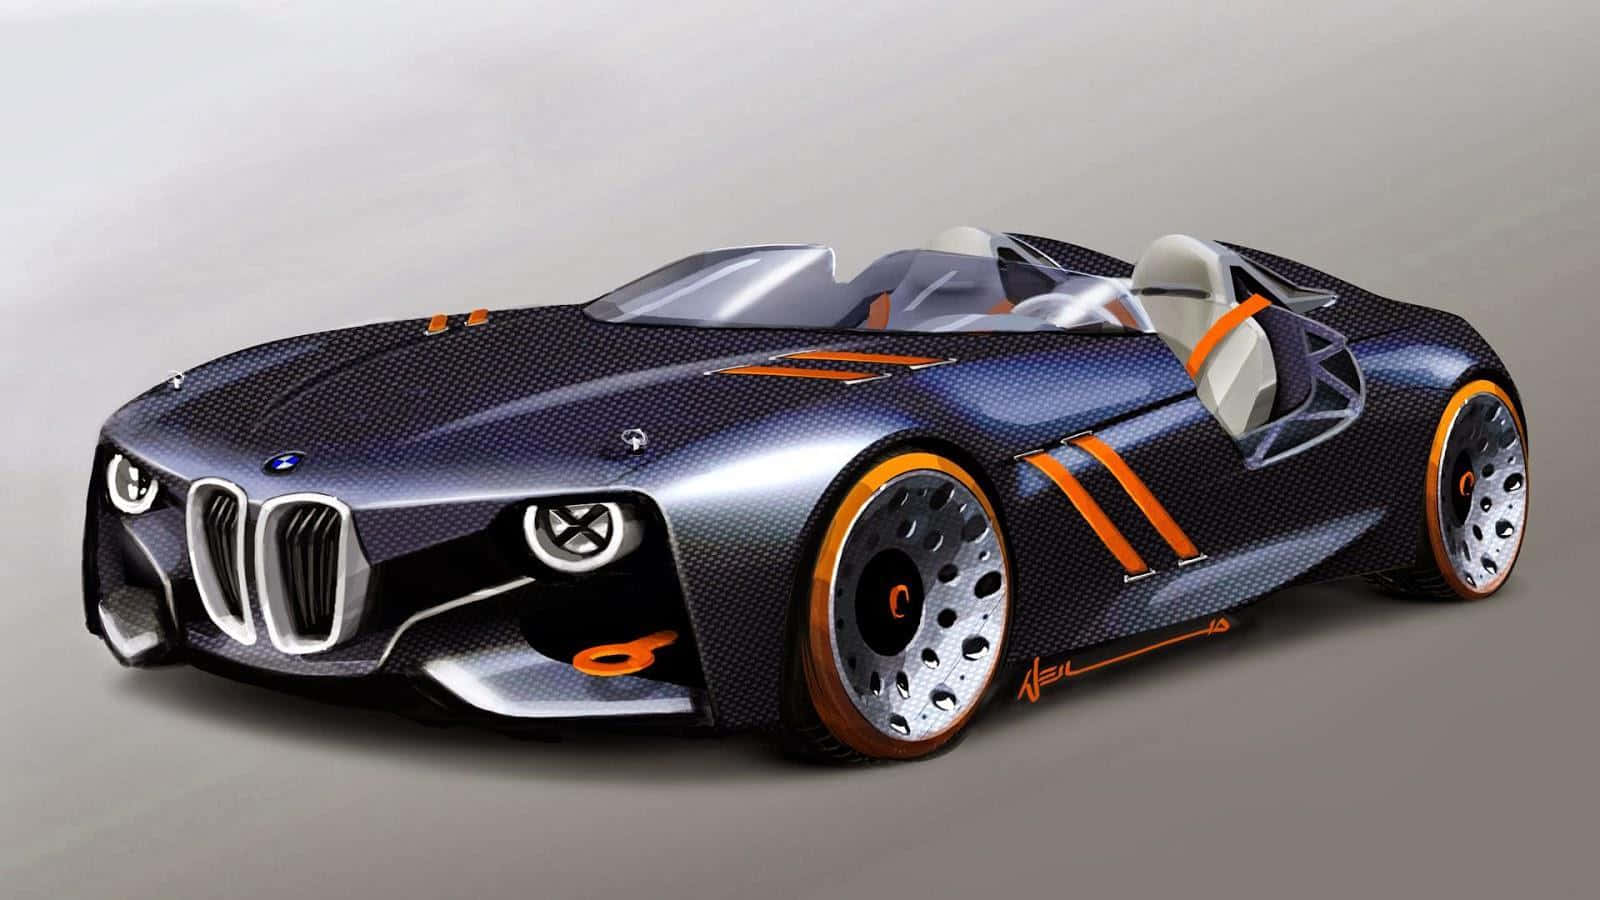 BMW x McLaren Fully Electric Concept : r/pics